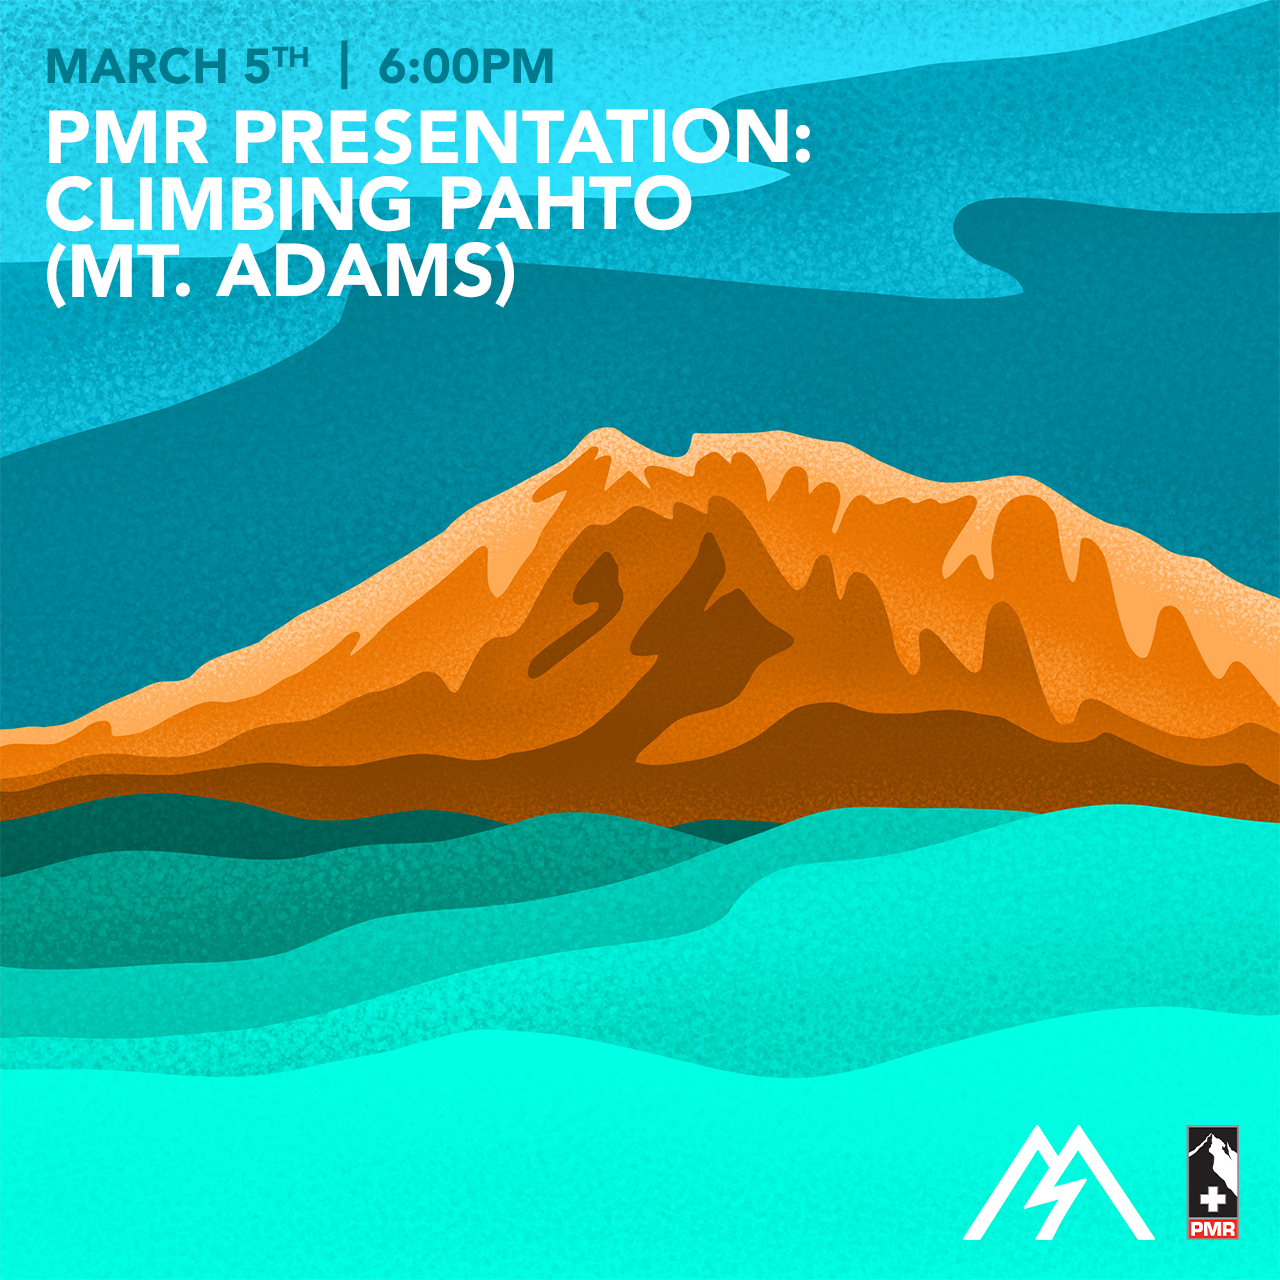 Climbing Pahto (Mt. Adams) - A PMR Presentation